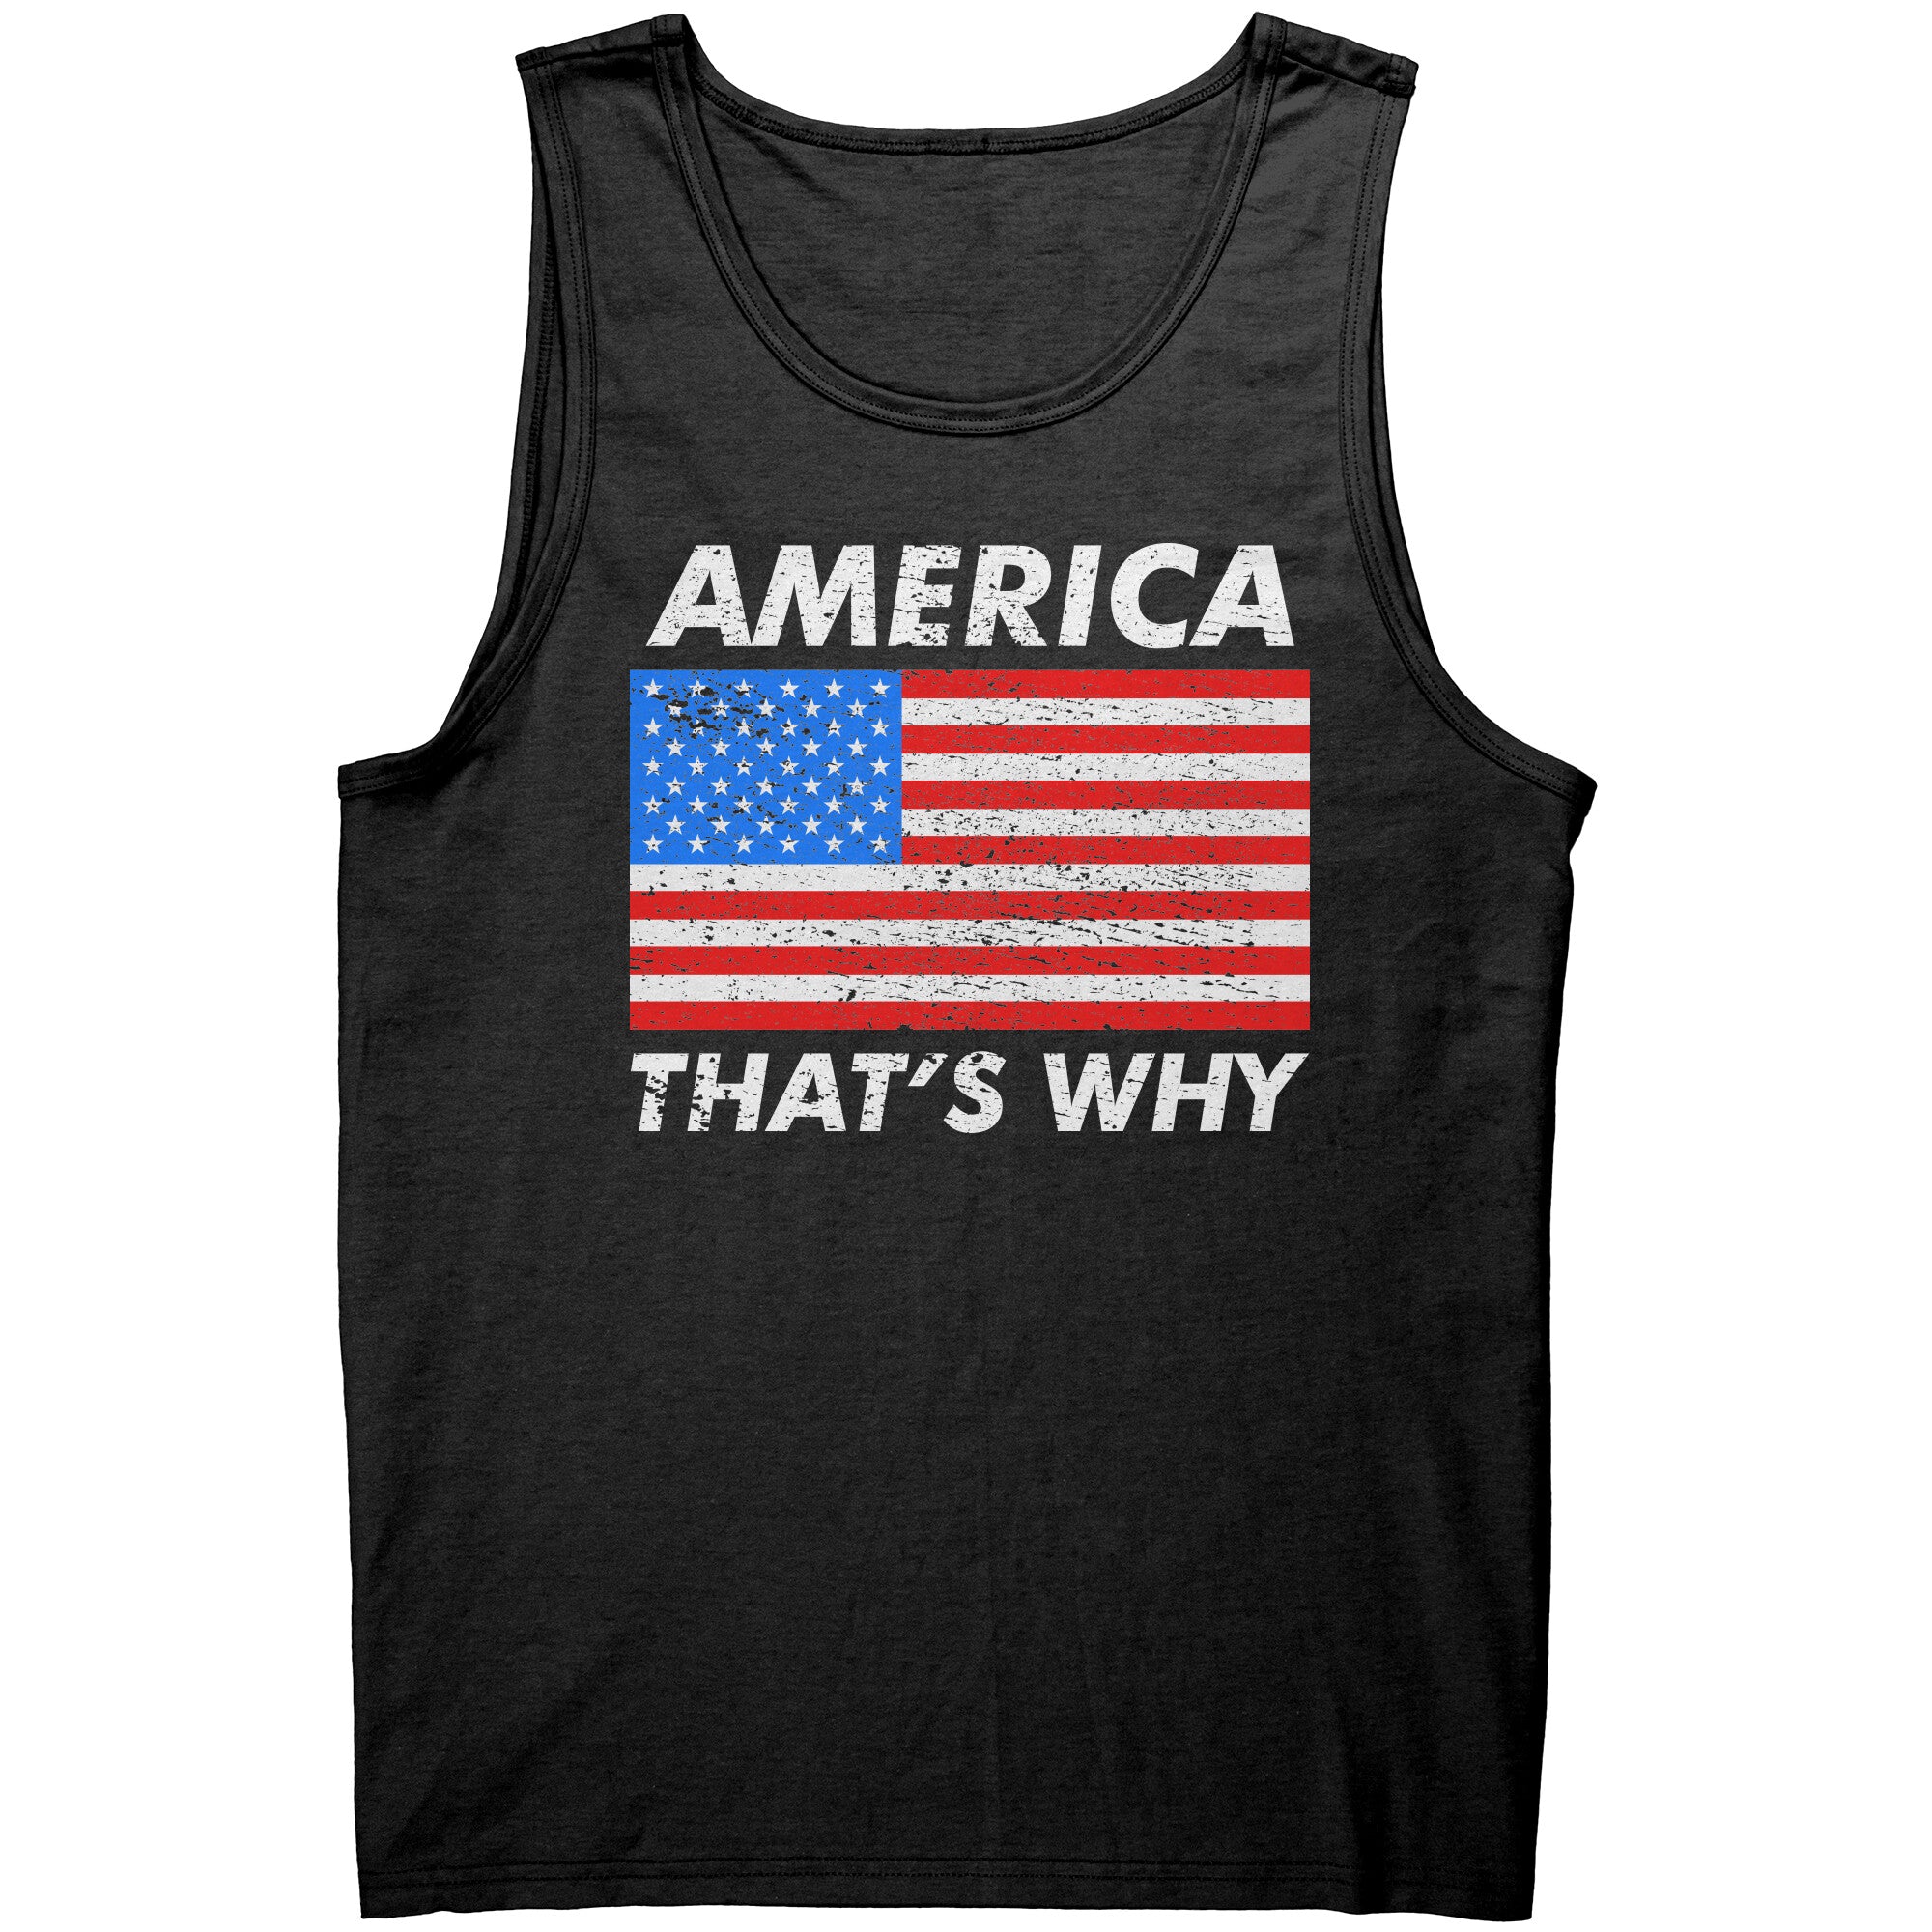 America That's Why -Apparel | Drunk America 